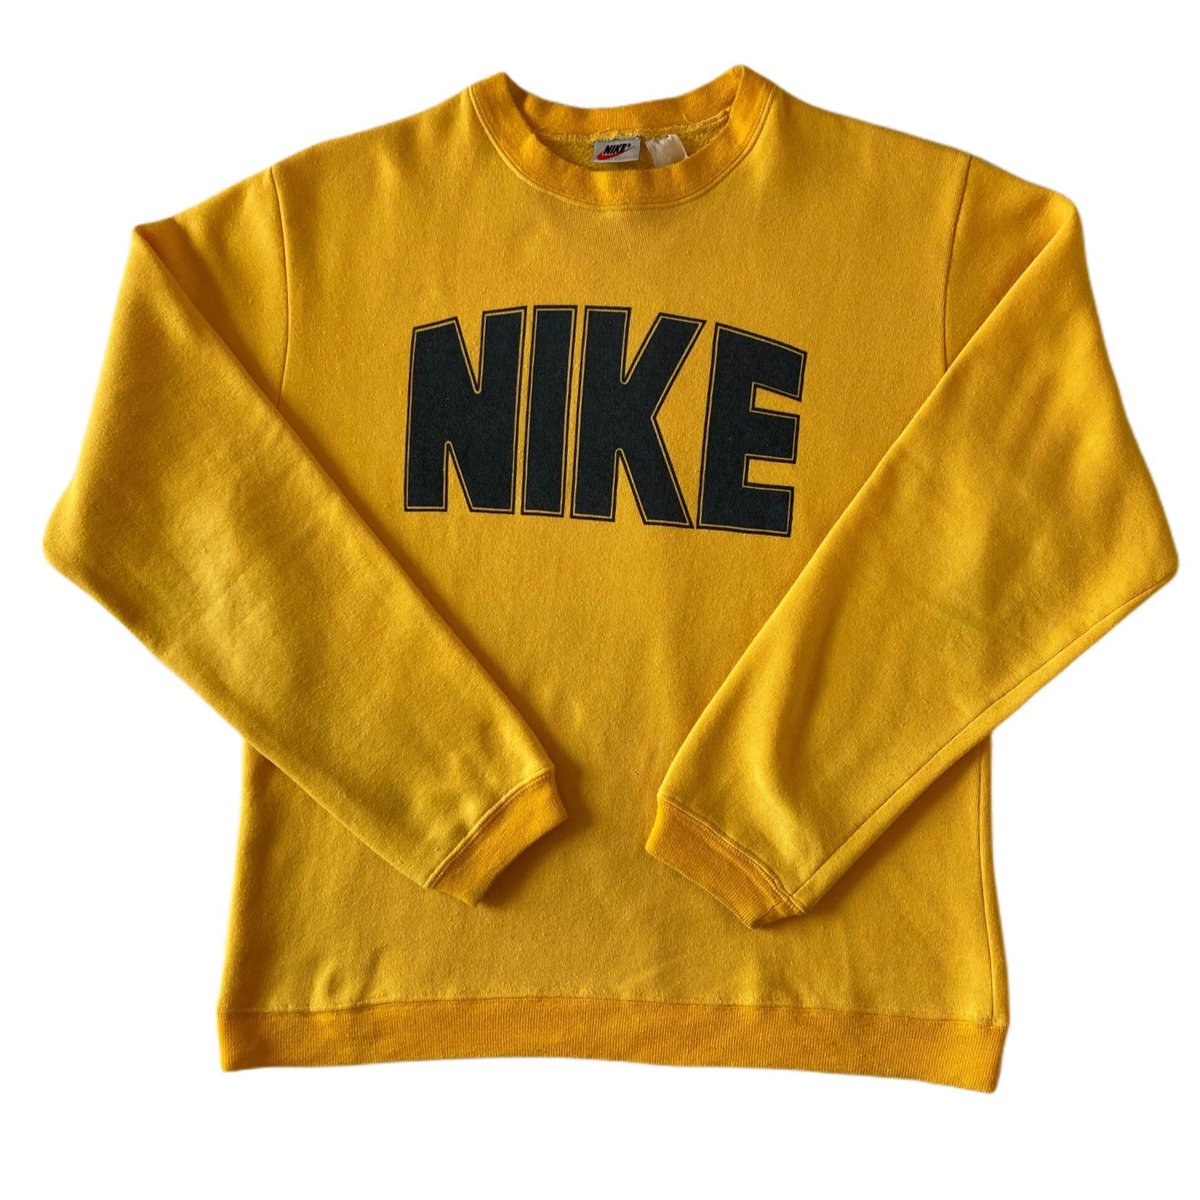 90's NIKE sweat shirt Made in USA / ナイキ カマボコナイキ...